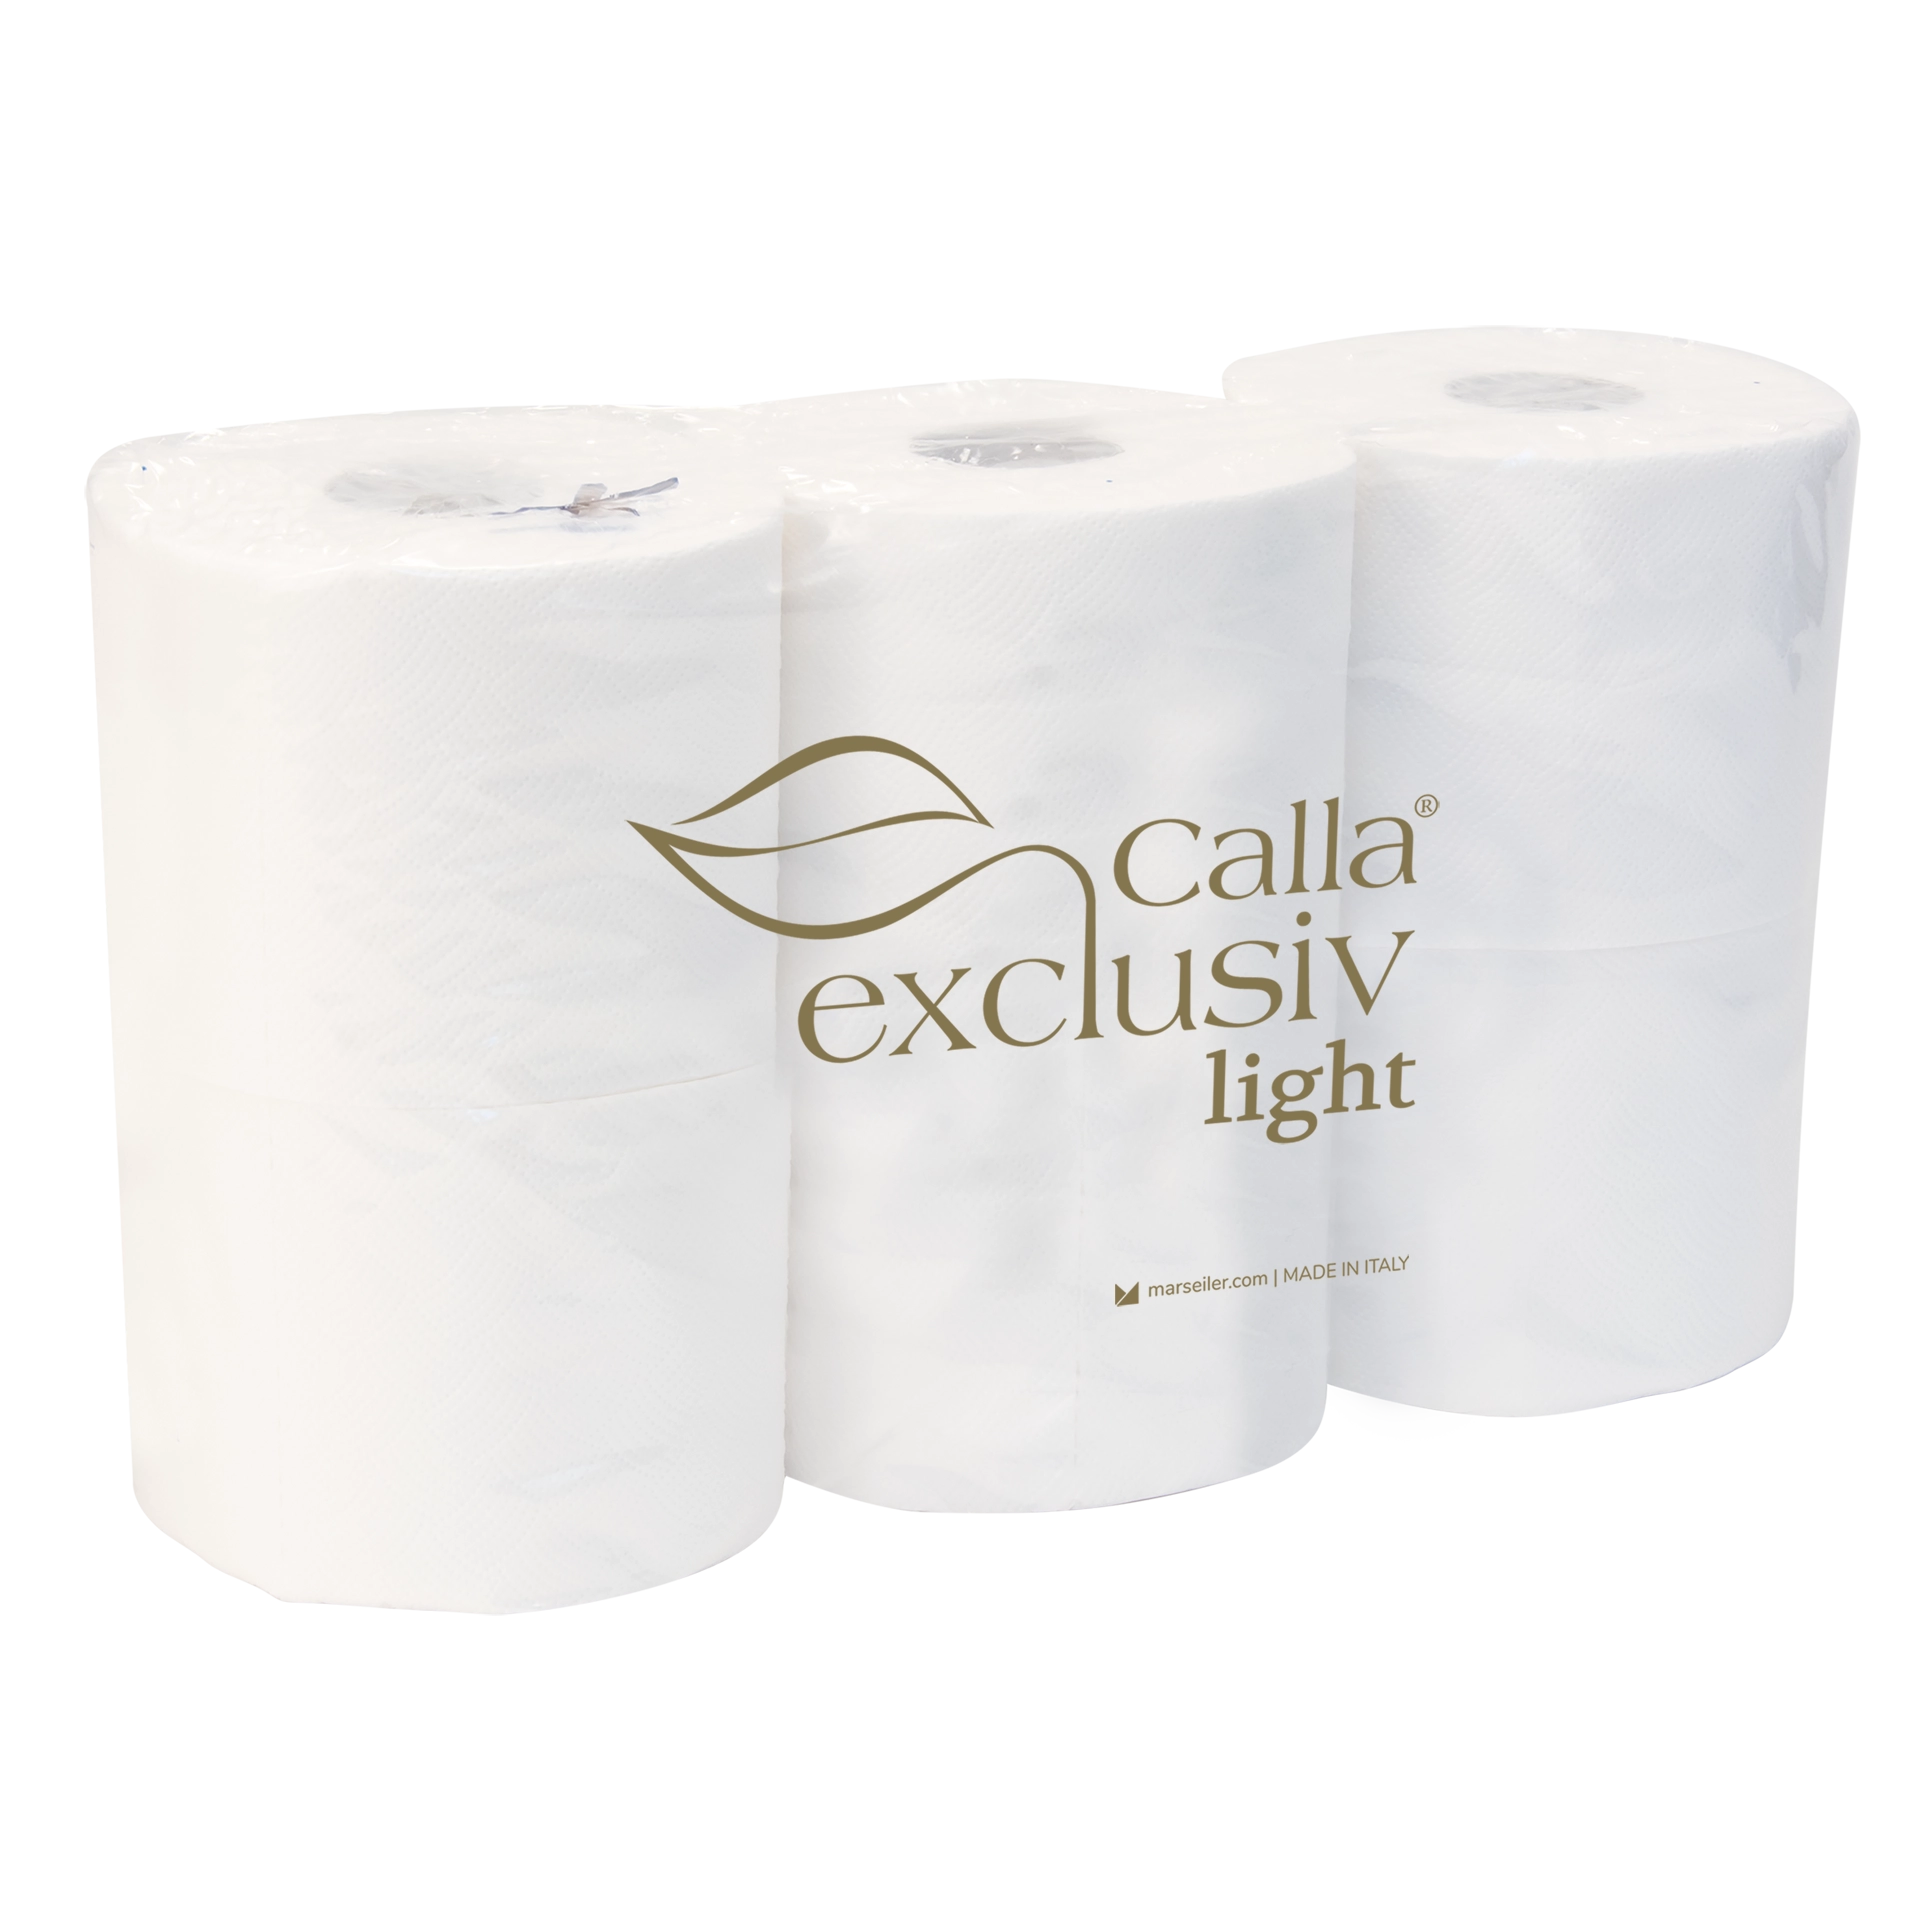 Toilettenpapier | Calla22 weiß 3lg. 250 Abrisse/12 cm